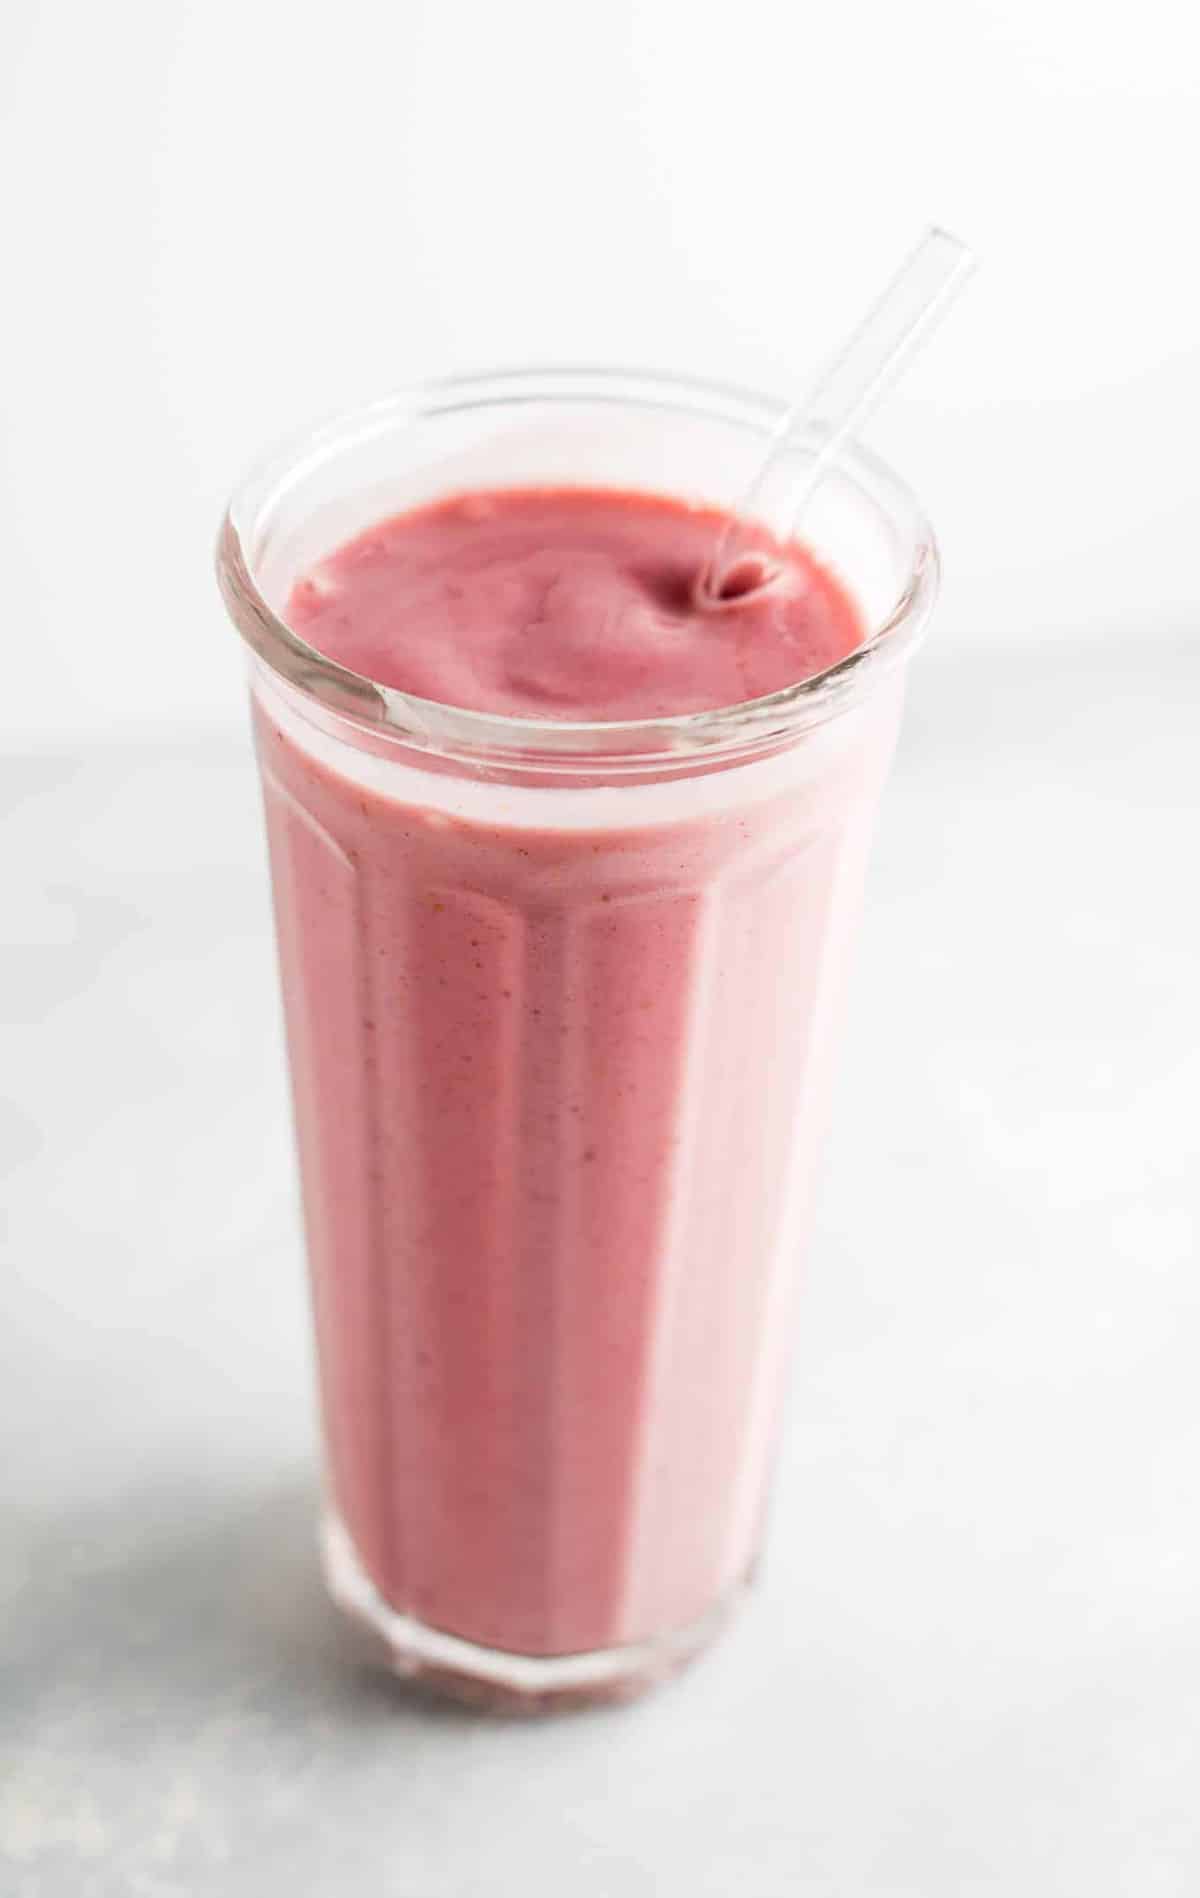 strawberry banana yogurt smoothie in a glass with a straw